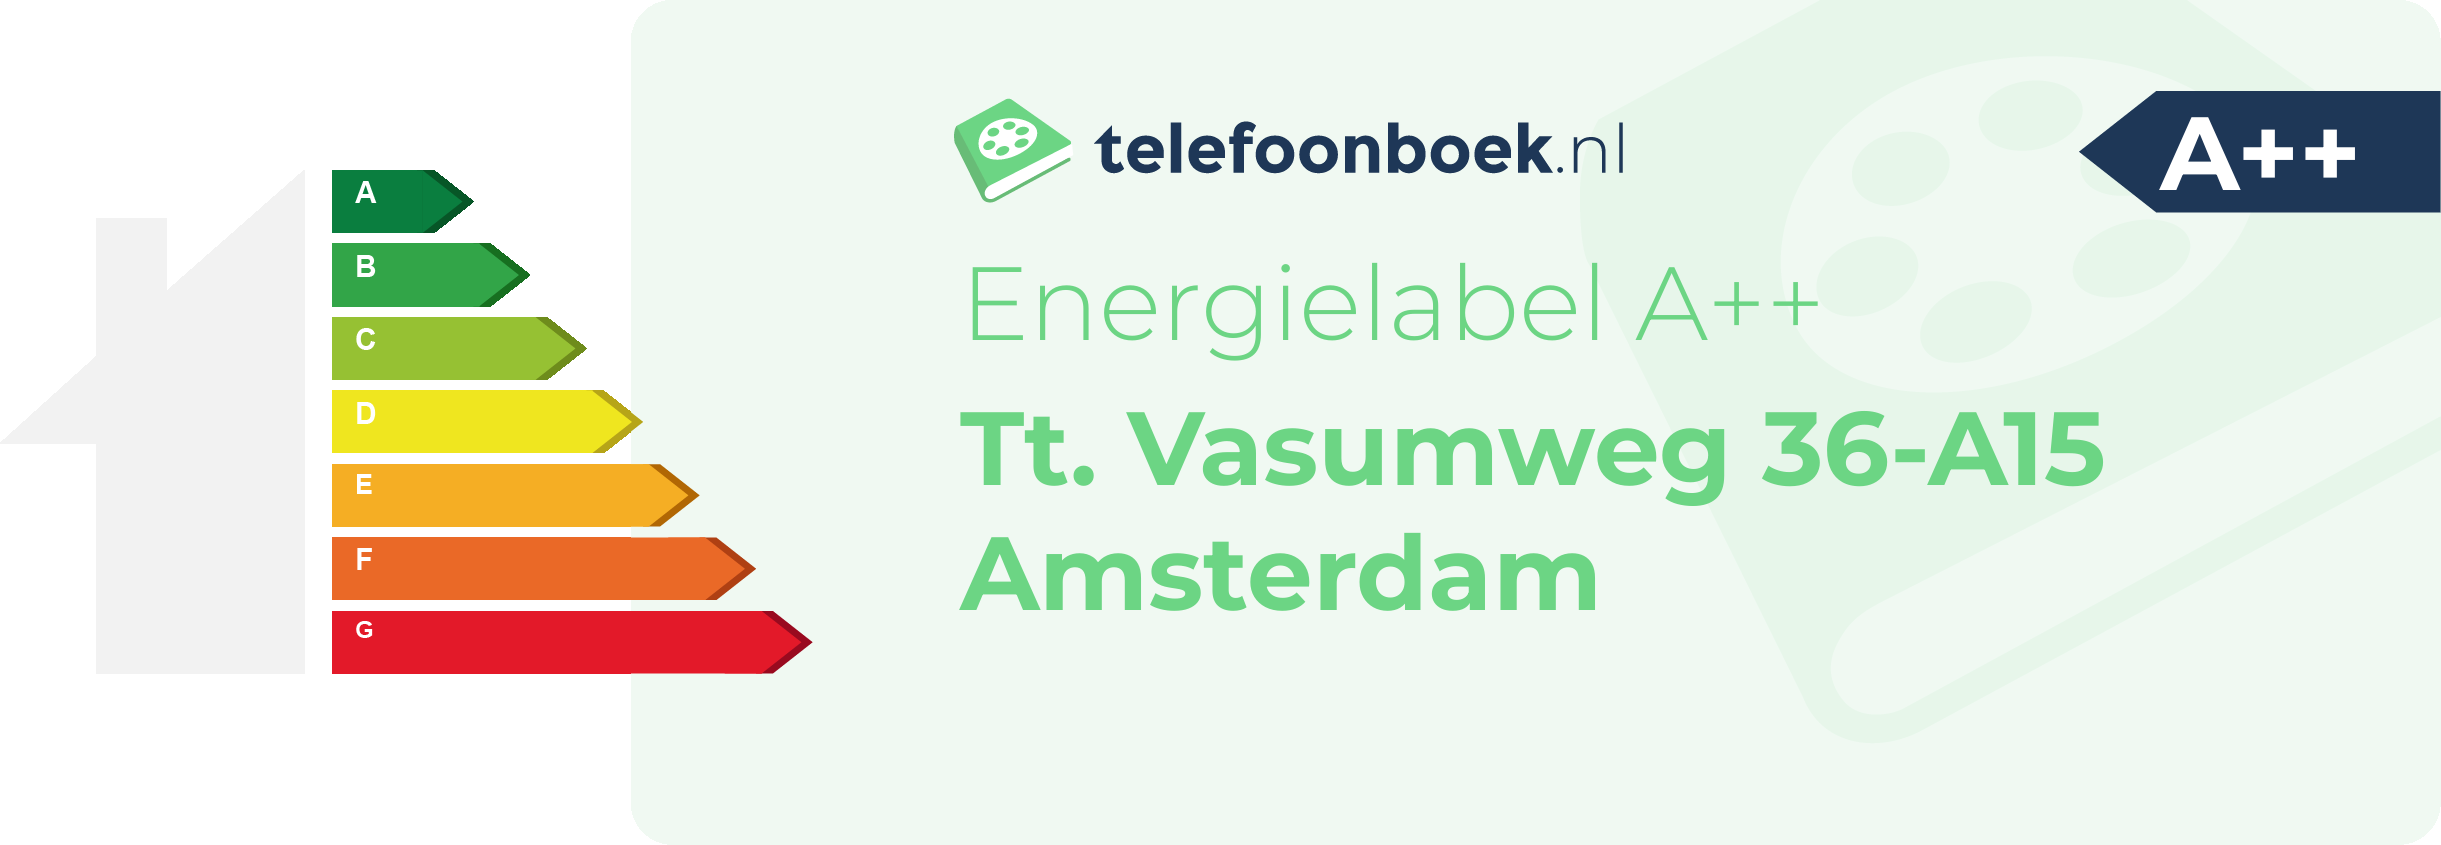 Energielabel Tt. Vasumweg 36-A15 Amsterdam